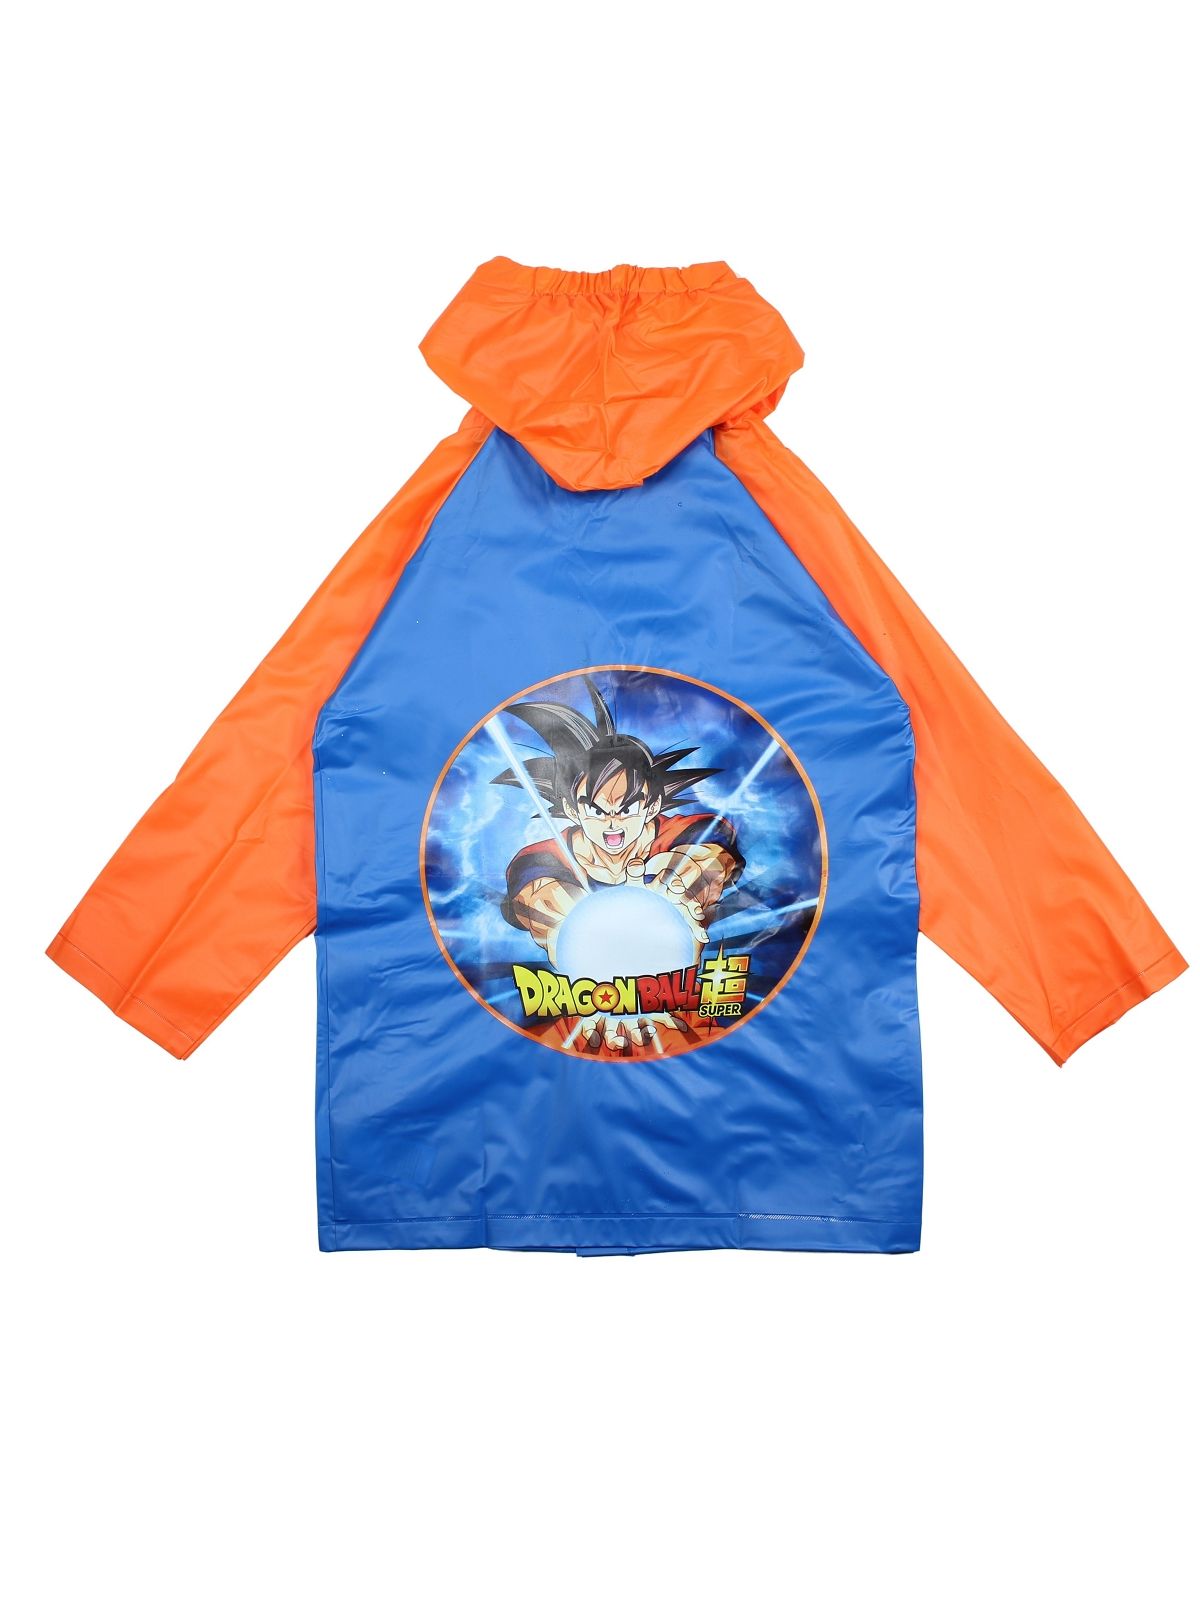 Dragon Ball raincoat